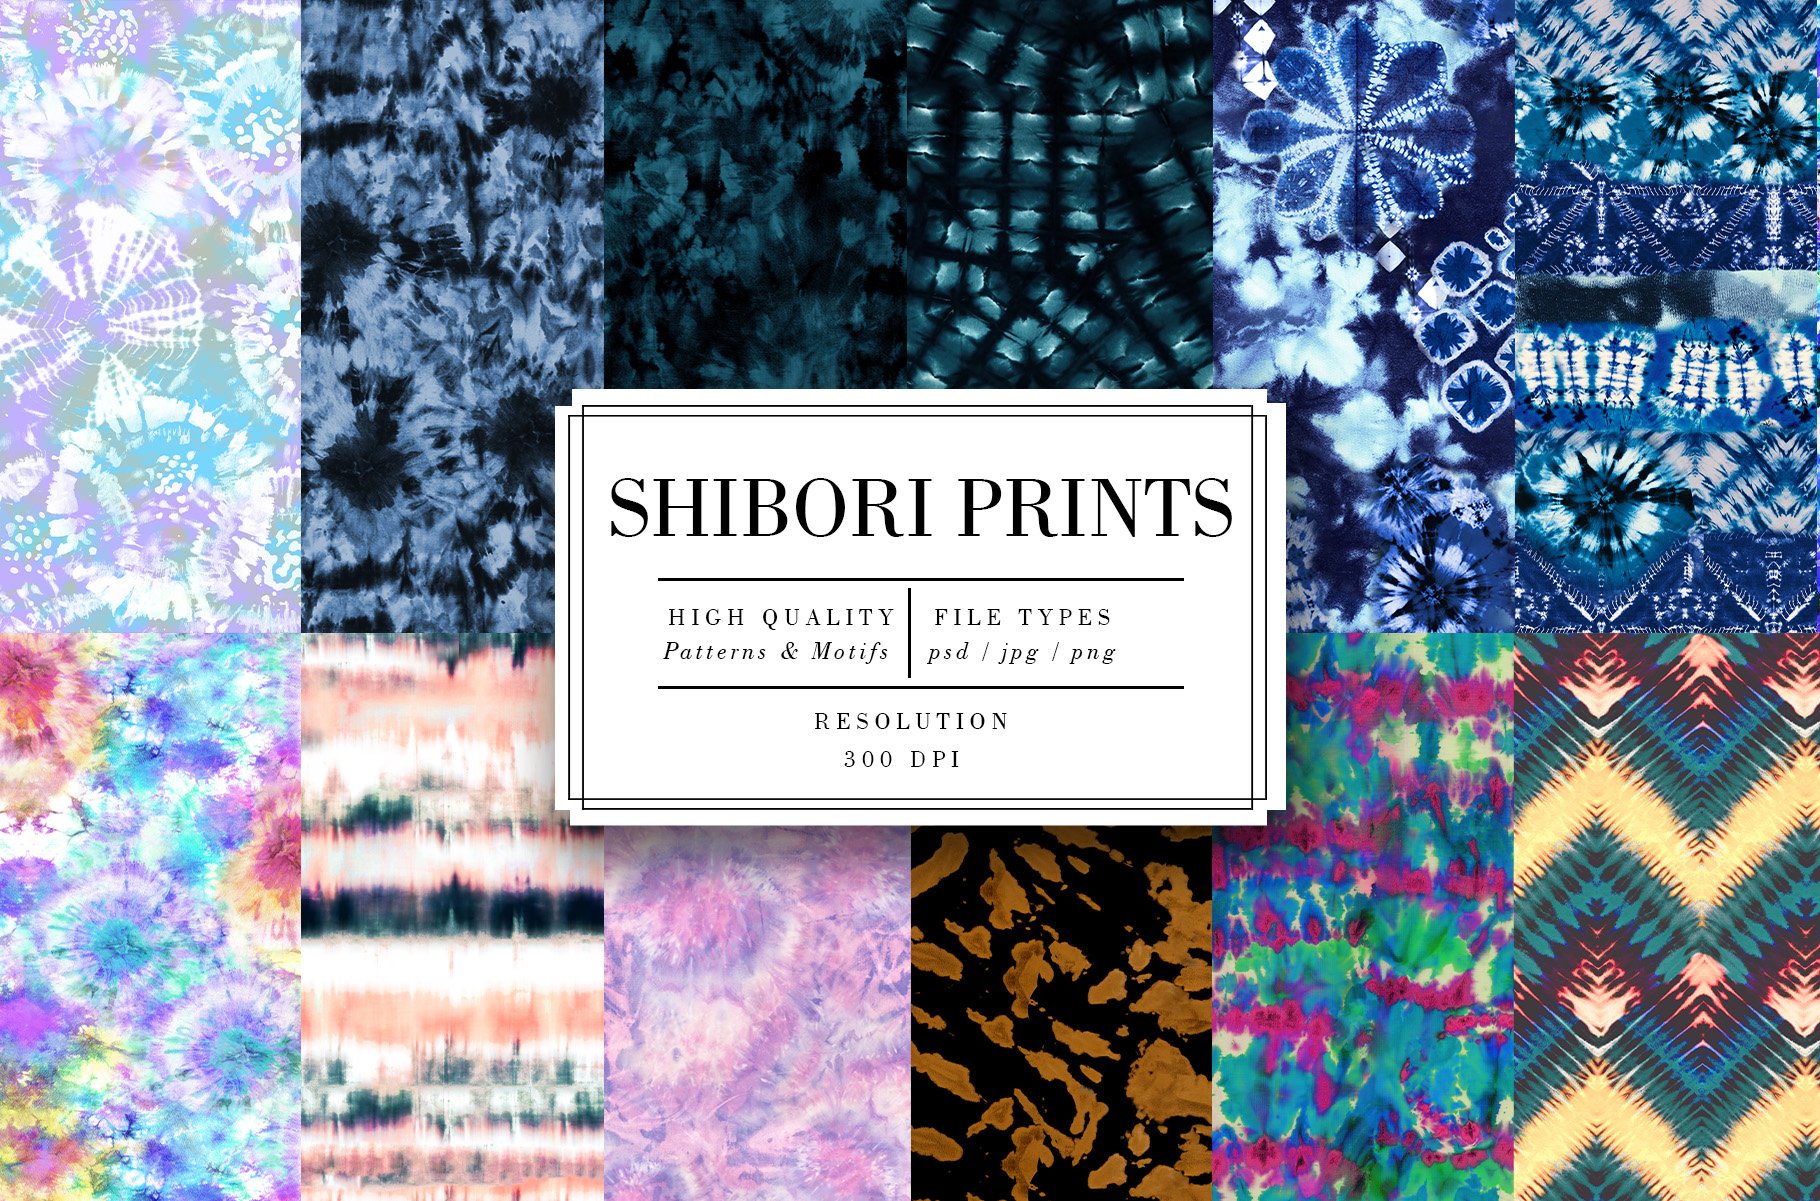 Shibori Prints cover image.